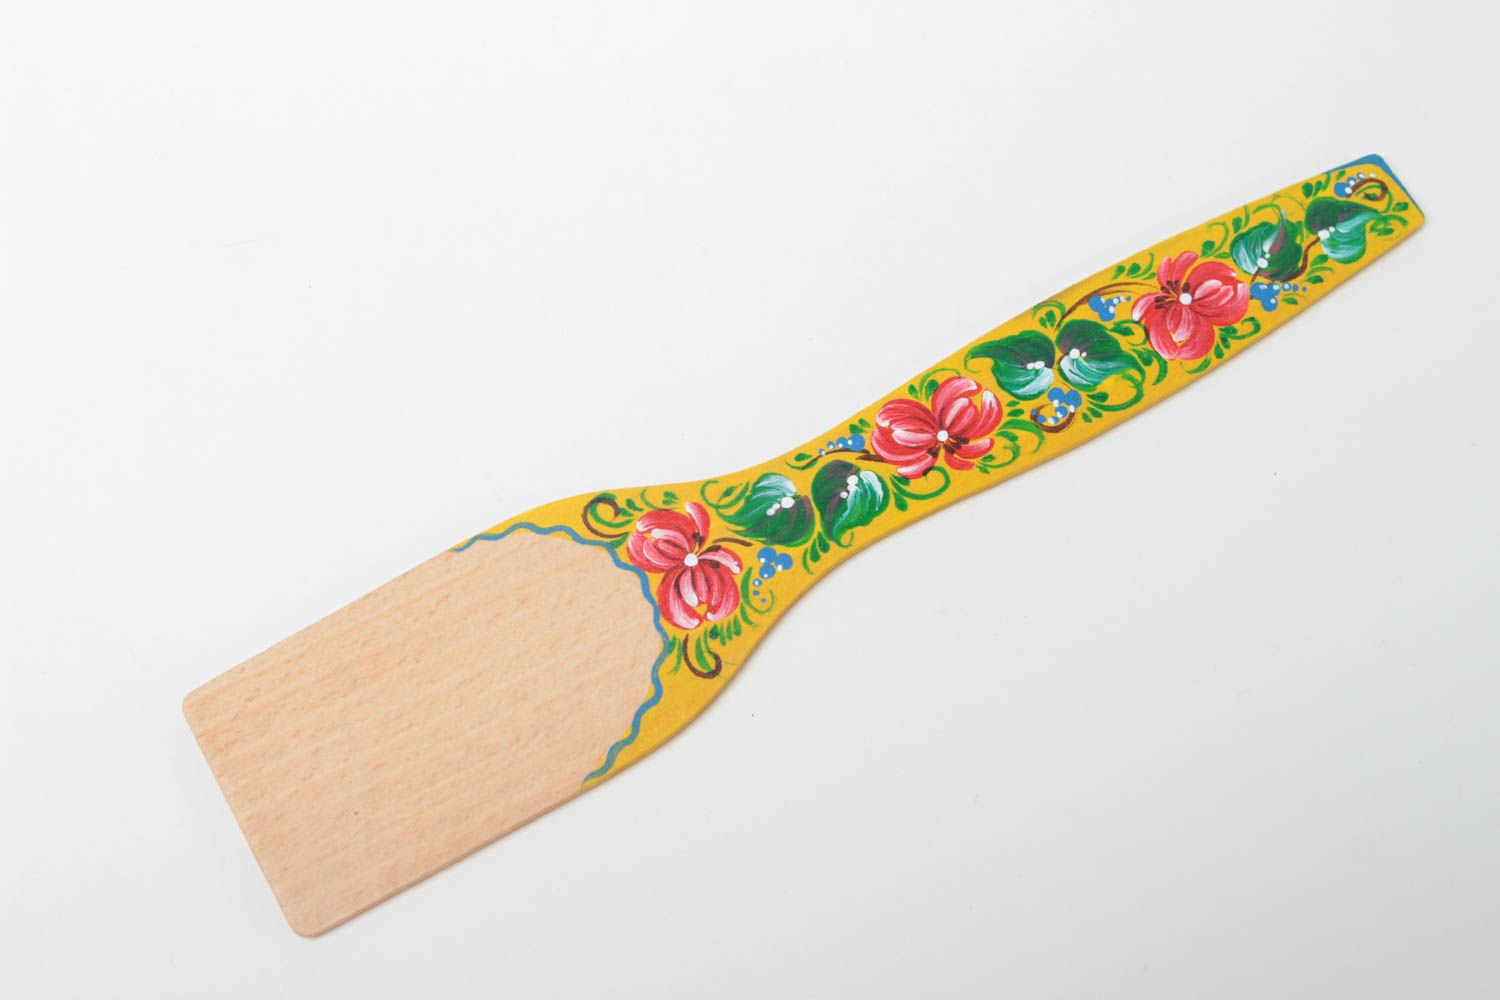 Beautiful homemade painted wooden spatula decorative kitchen utensils gift ideas photo 2